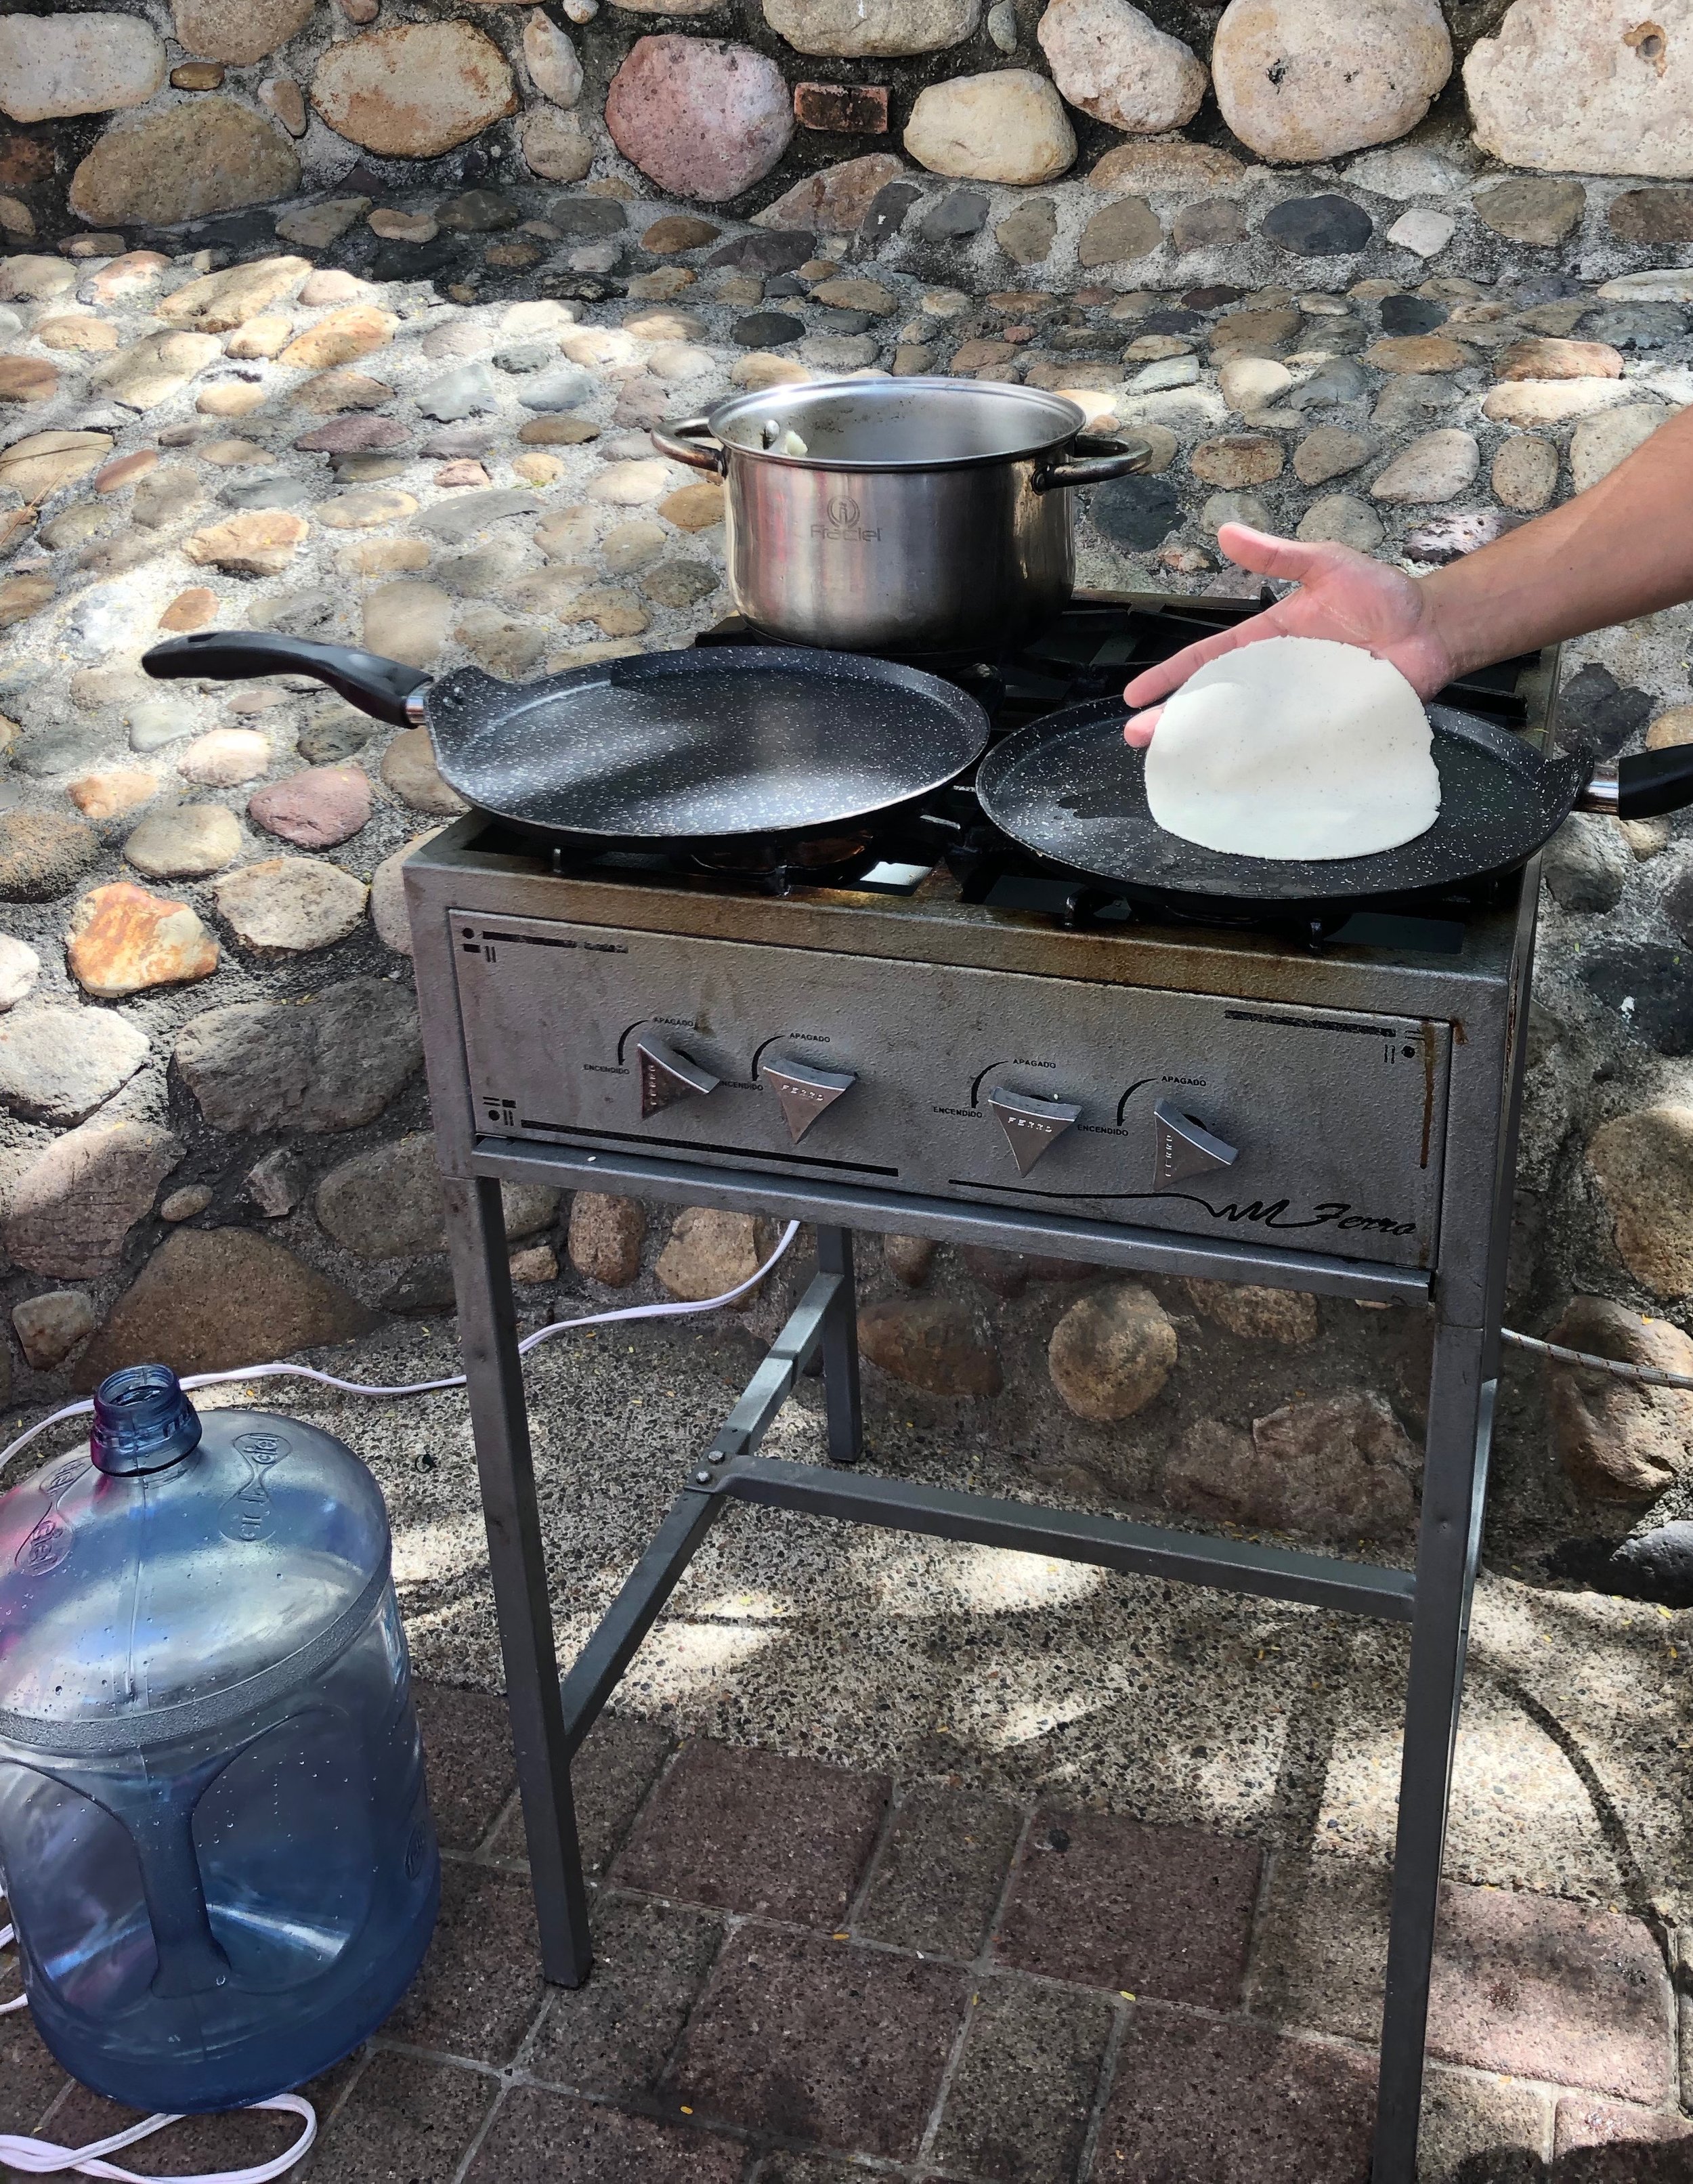 Slide tortilla onto nonstick pan